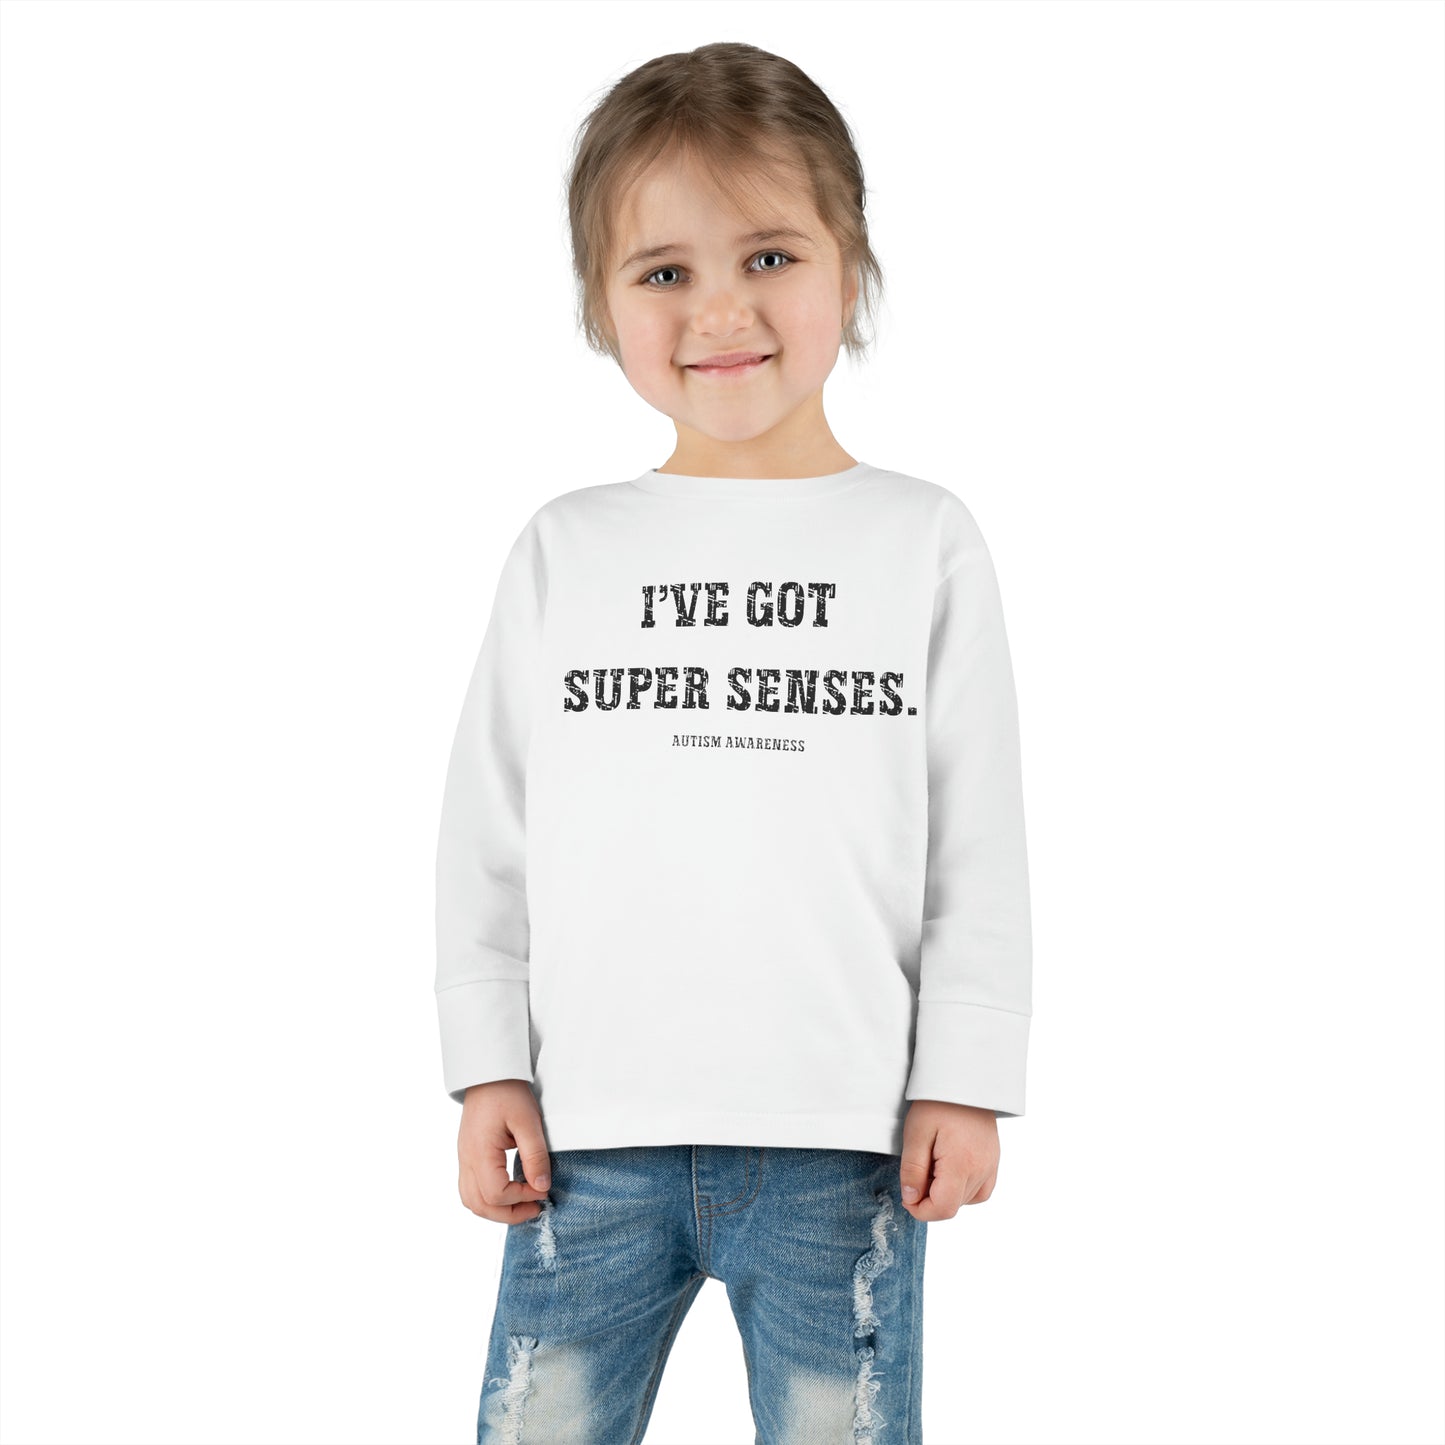 Super Senses Autism Awareness Toddler Long Sleeve Tee